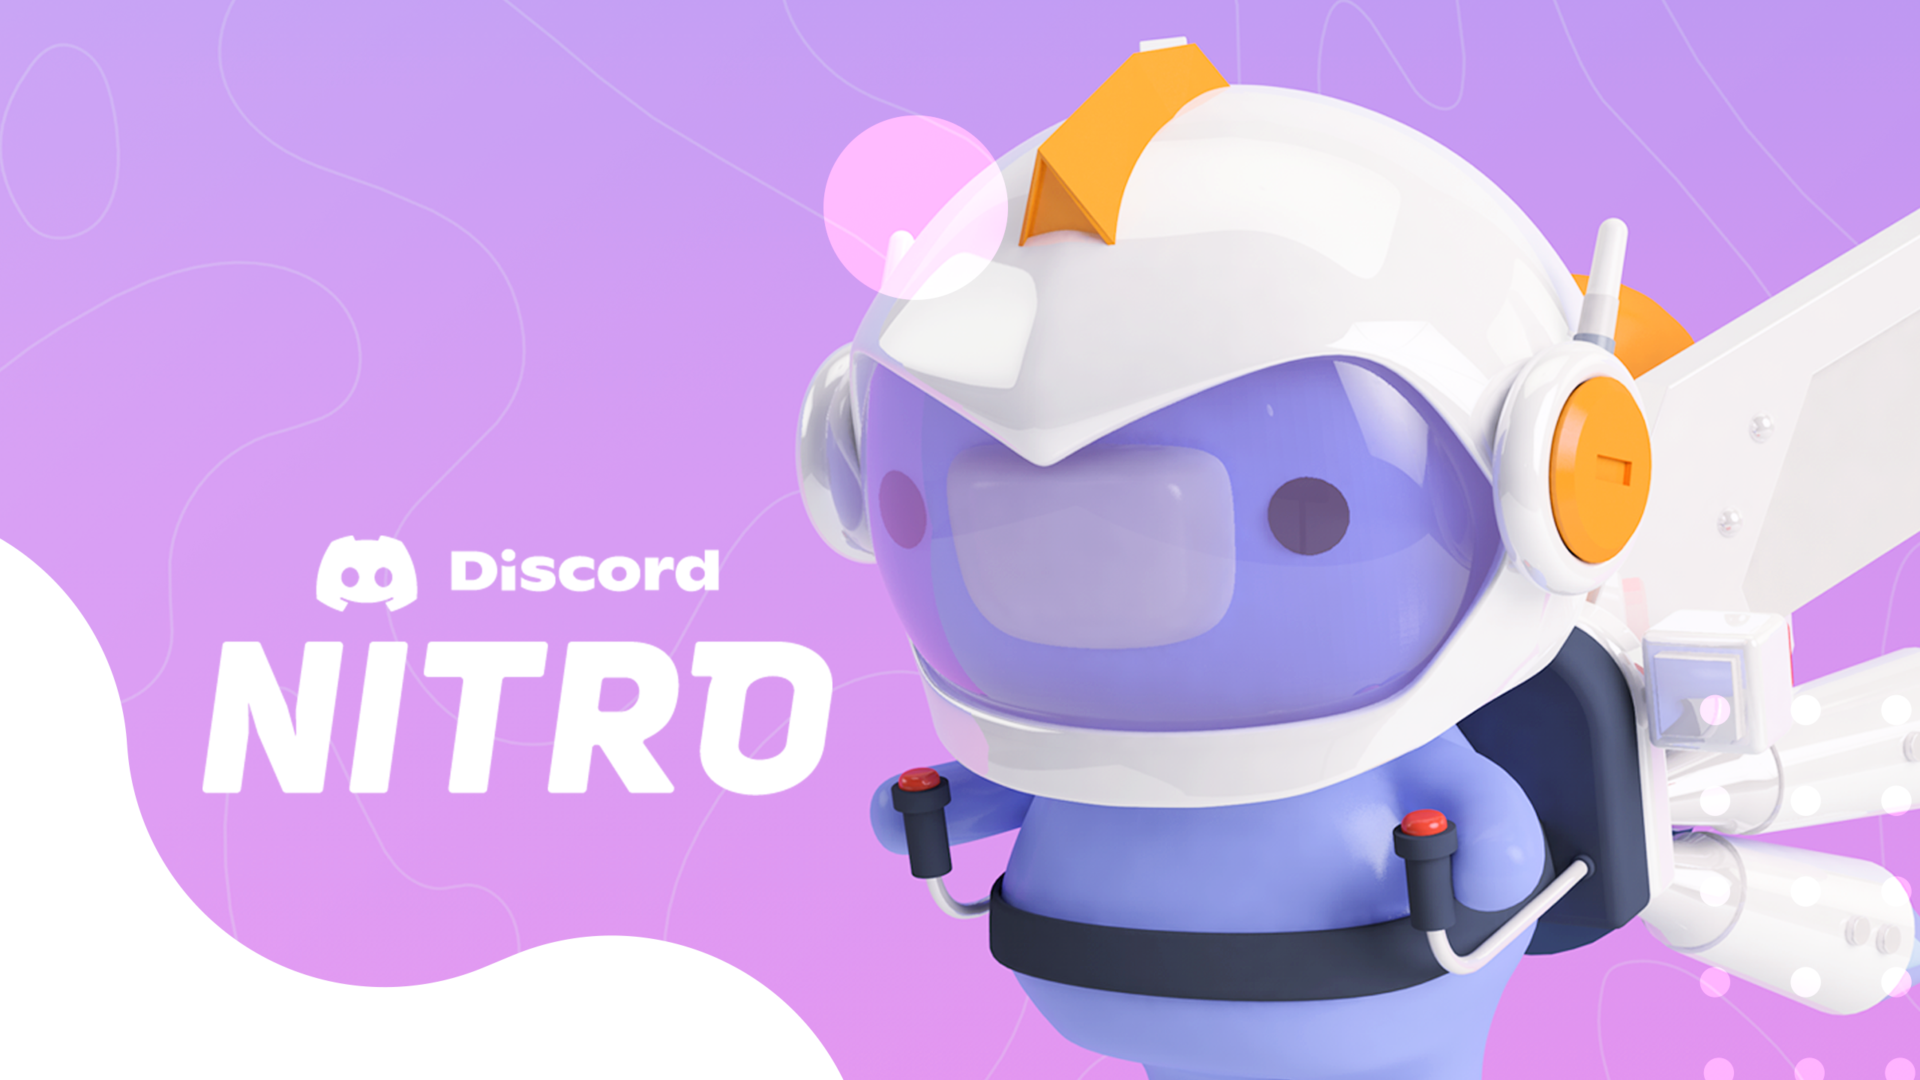 warframe nitro discord on steam account